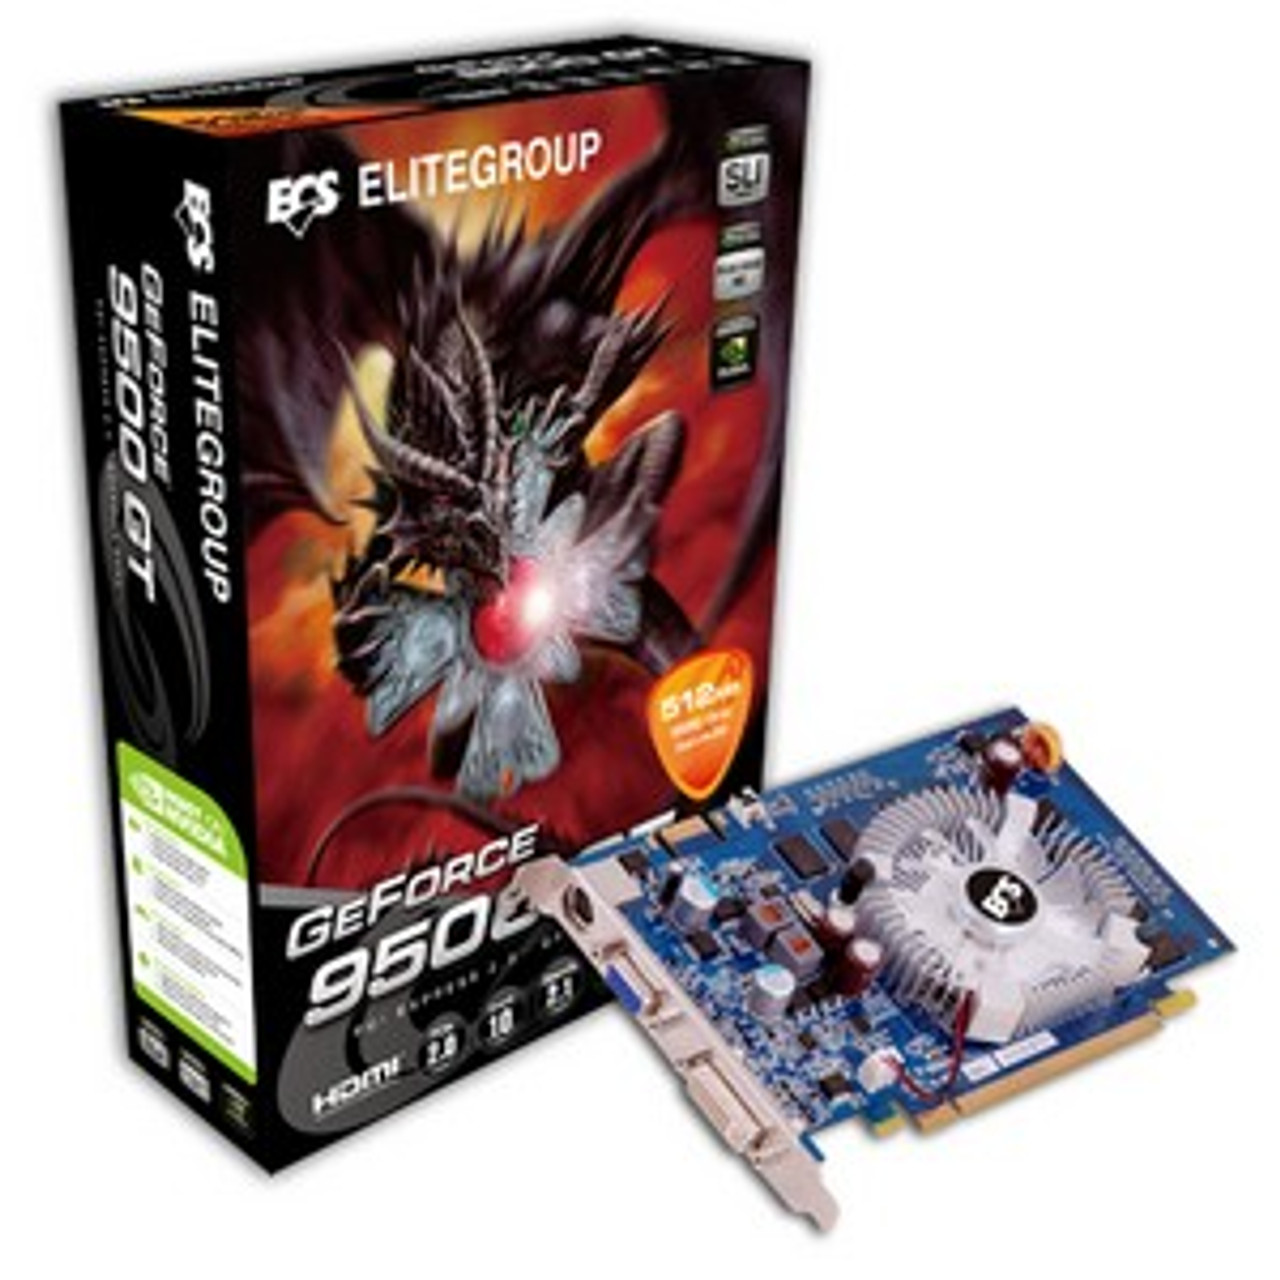 Elitegroup GeForce 9500 GT Graphics Card nVIDIA GeForce 9500 GT 550MHz 512MB DDR2 SDRAM 128bit PCI Express 2.0 DVI-I, HD-15 Mfr P/N N9500GT-512DZ-F